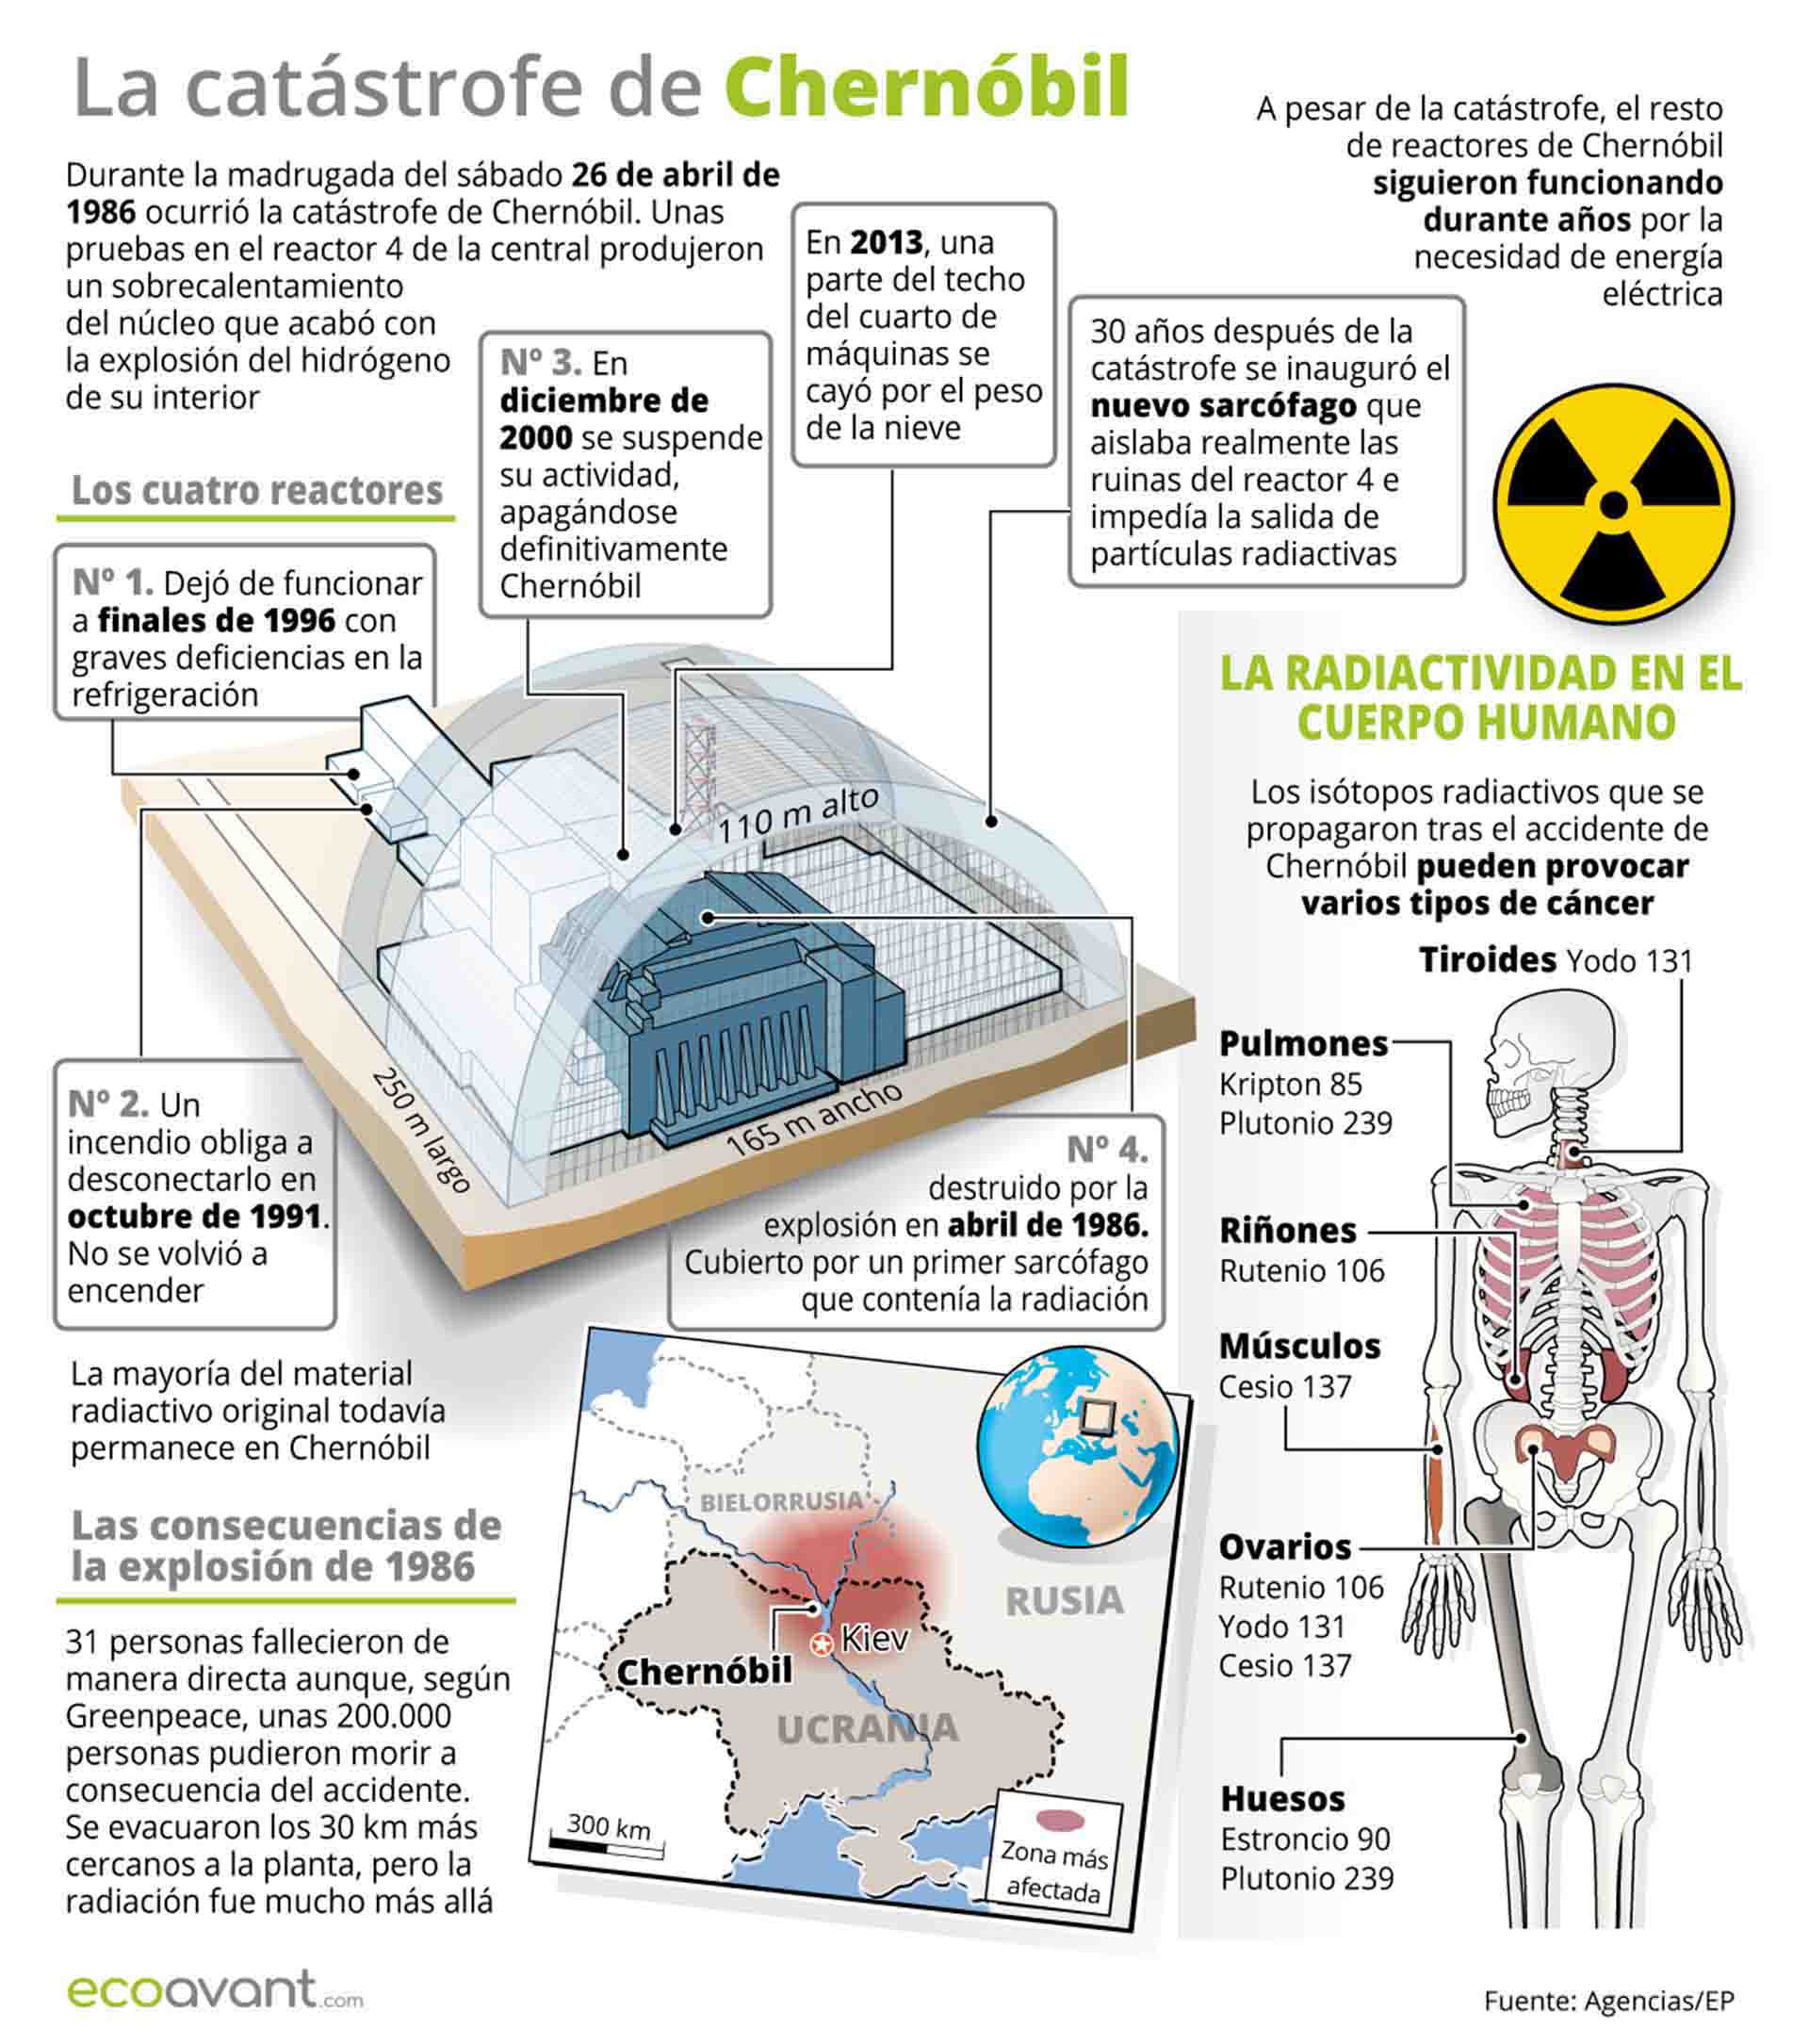 La catástrofe de Chernóbil en gráficos / Imagen: EcoAvant.com